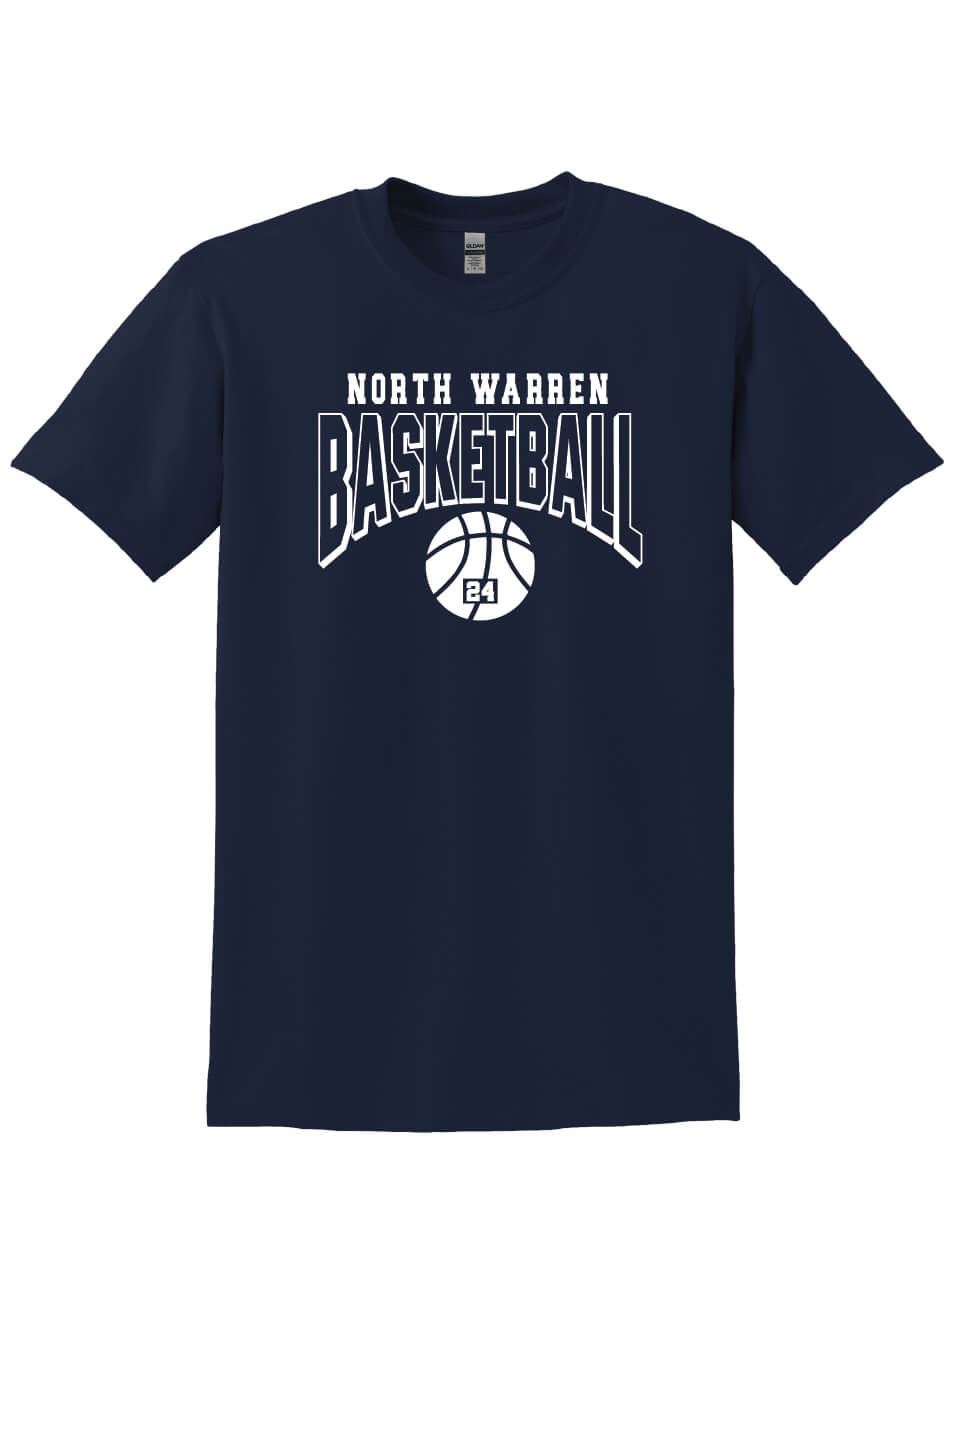 Basketball Short Sleeve T-Shirt (Youth) navy